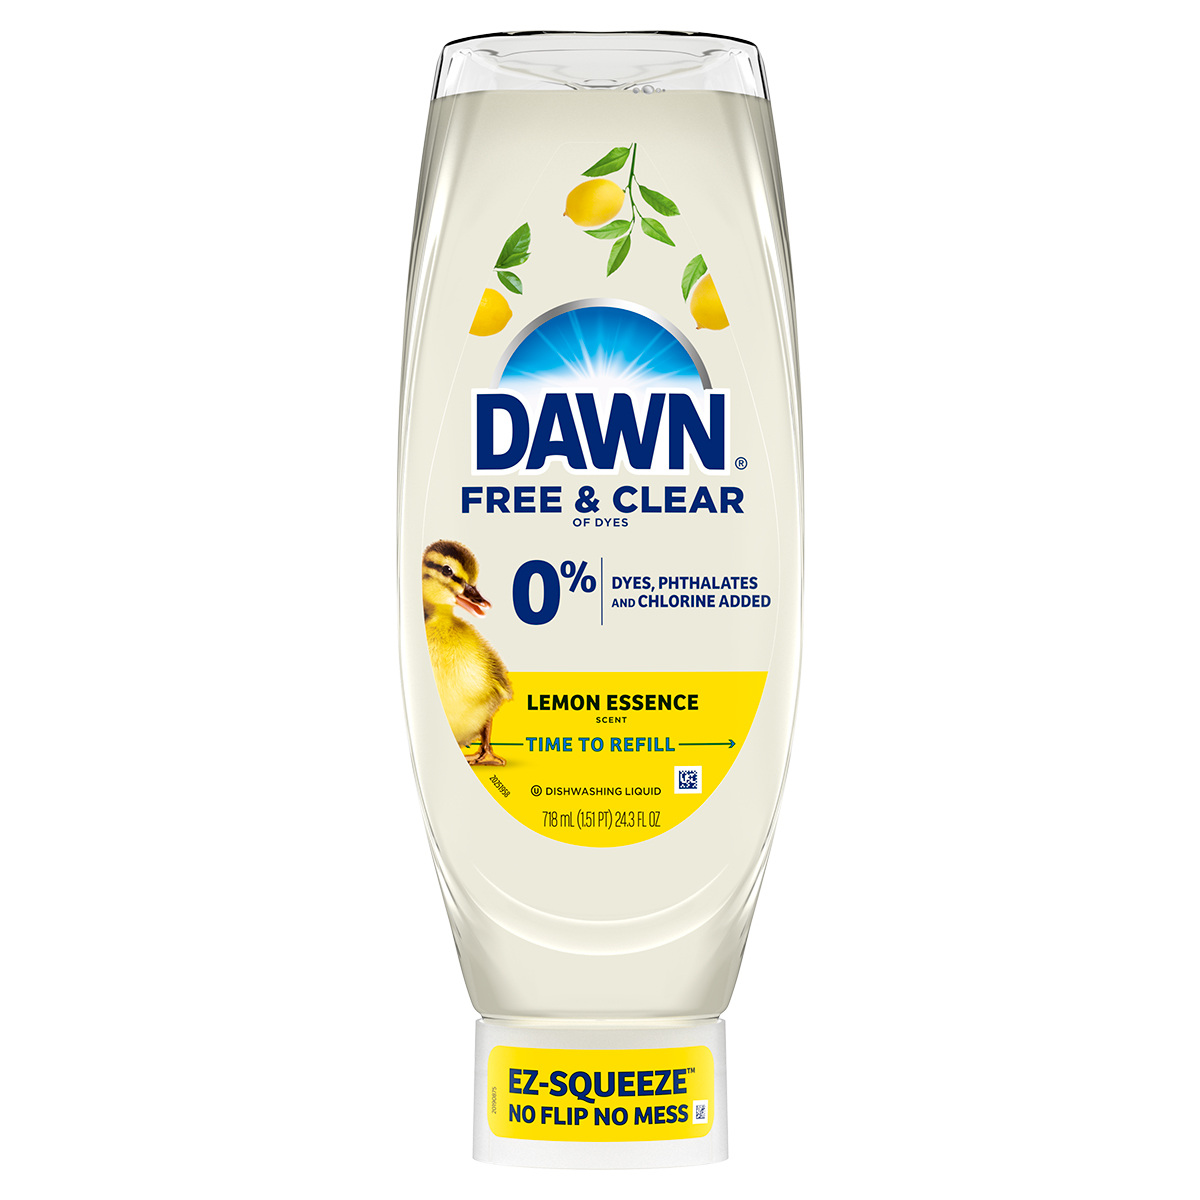 Jabón para trastes líquido Dawn Free and Clear, aroma a limón